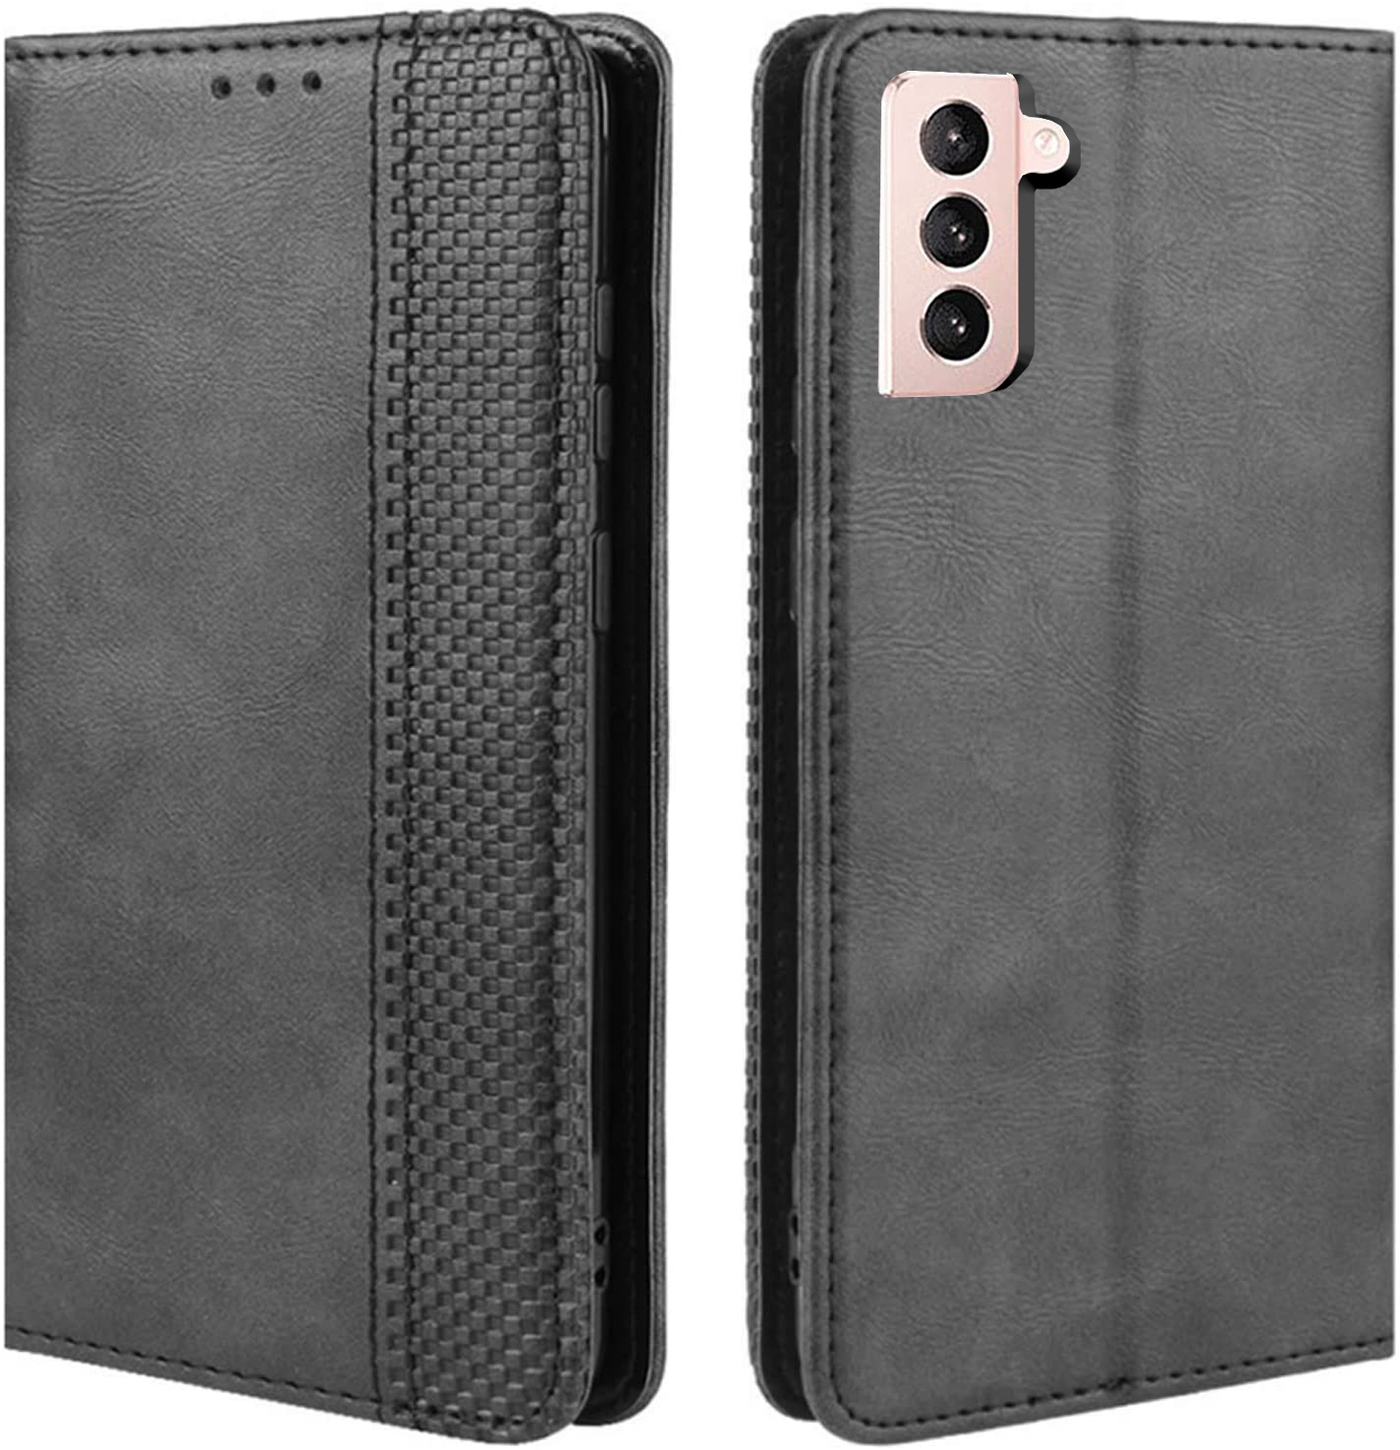 Samsung Galaxy S21 Plus black color wallet flip cover case By excelsior